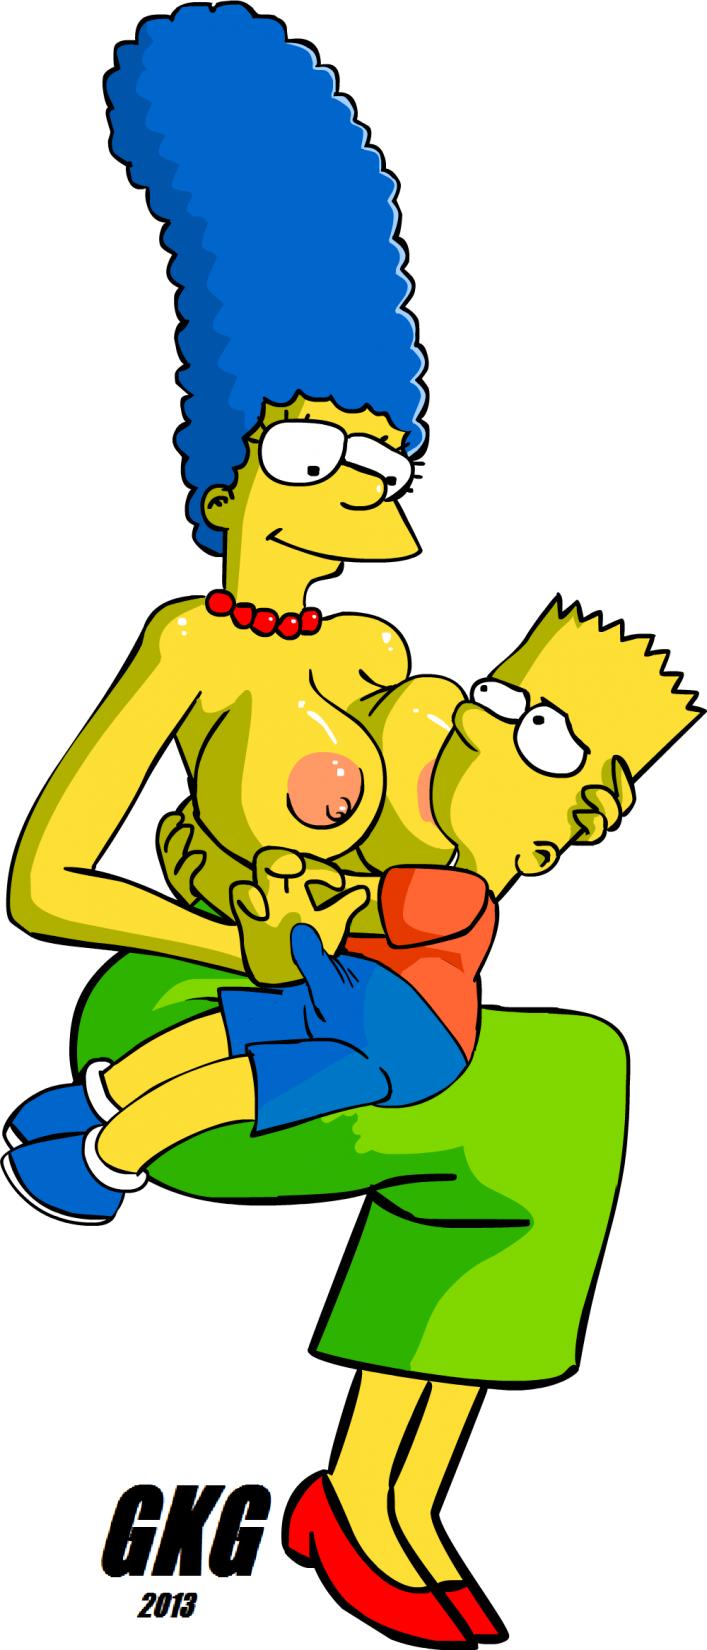 GKG - Marge & Bart